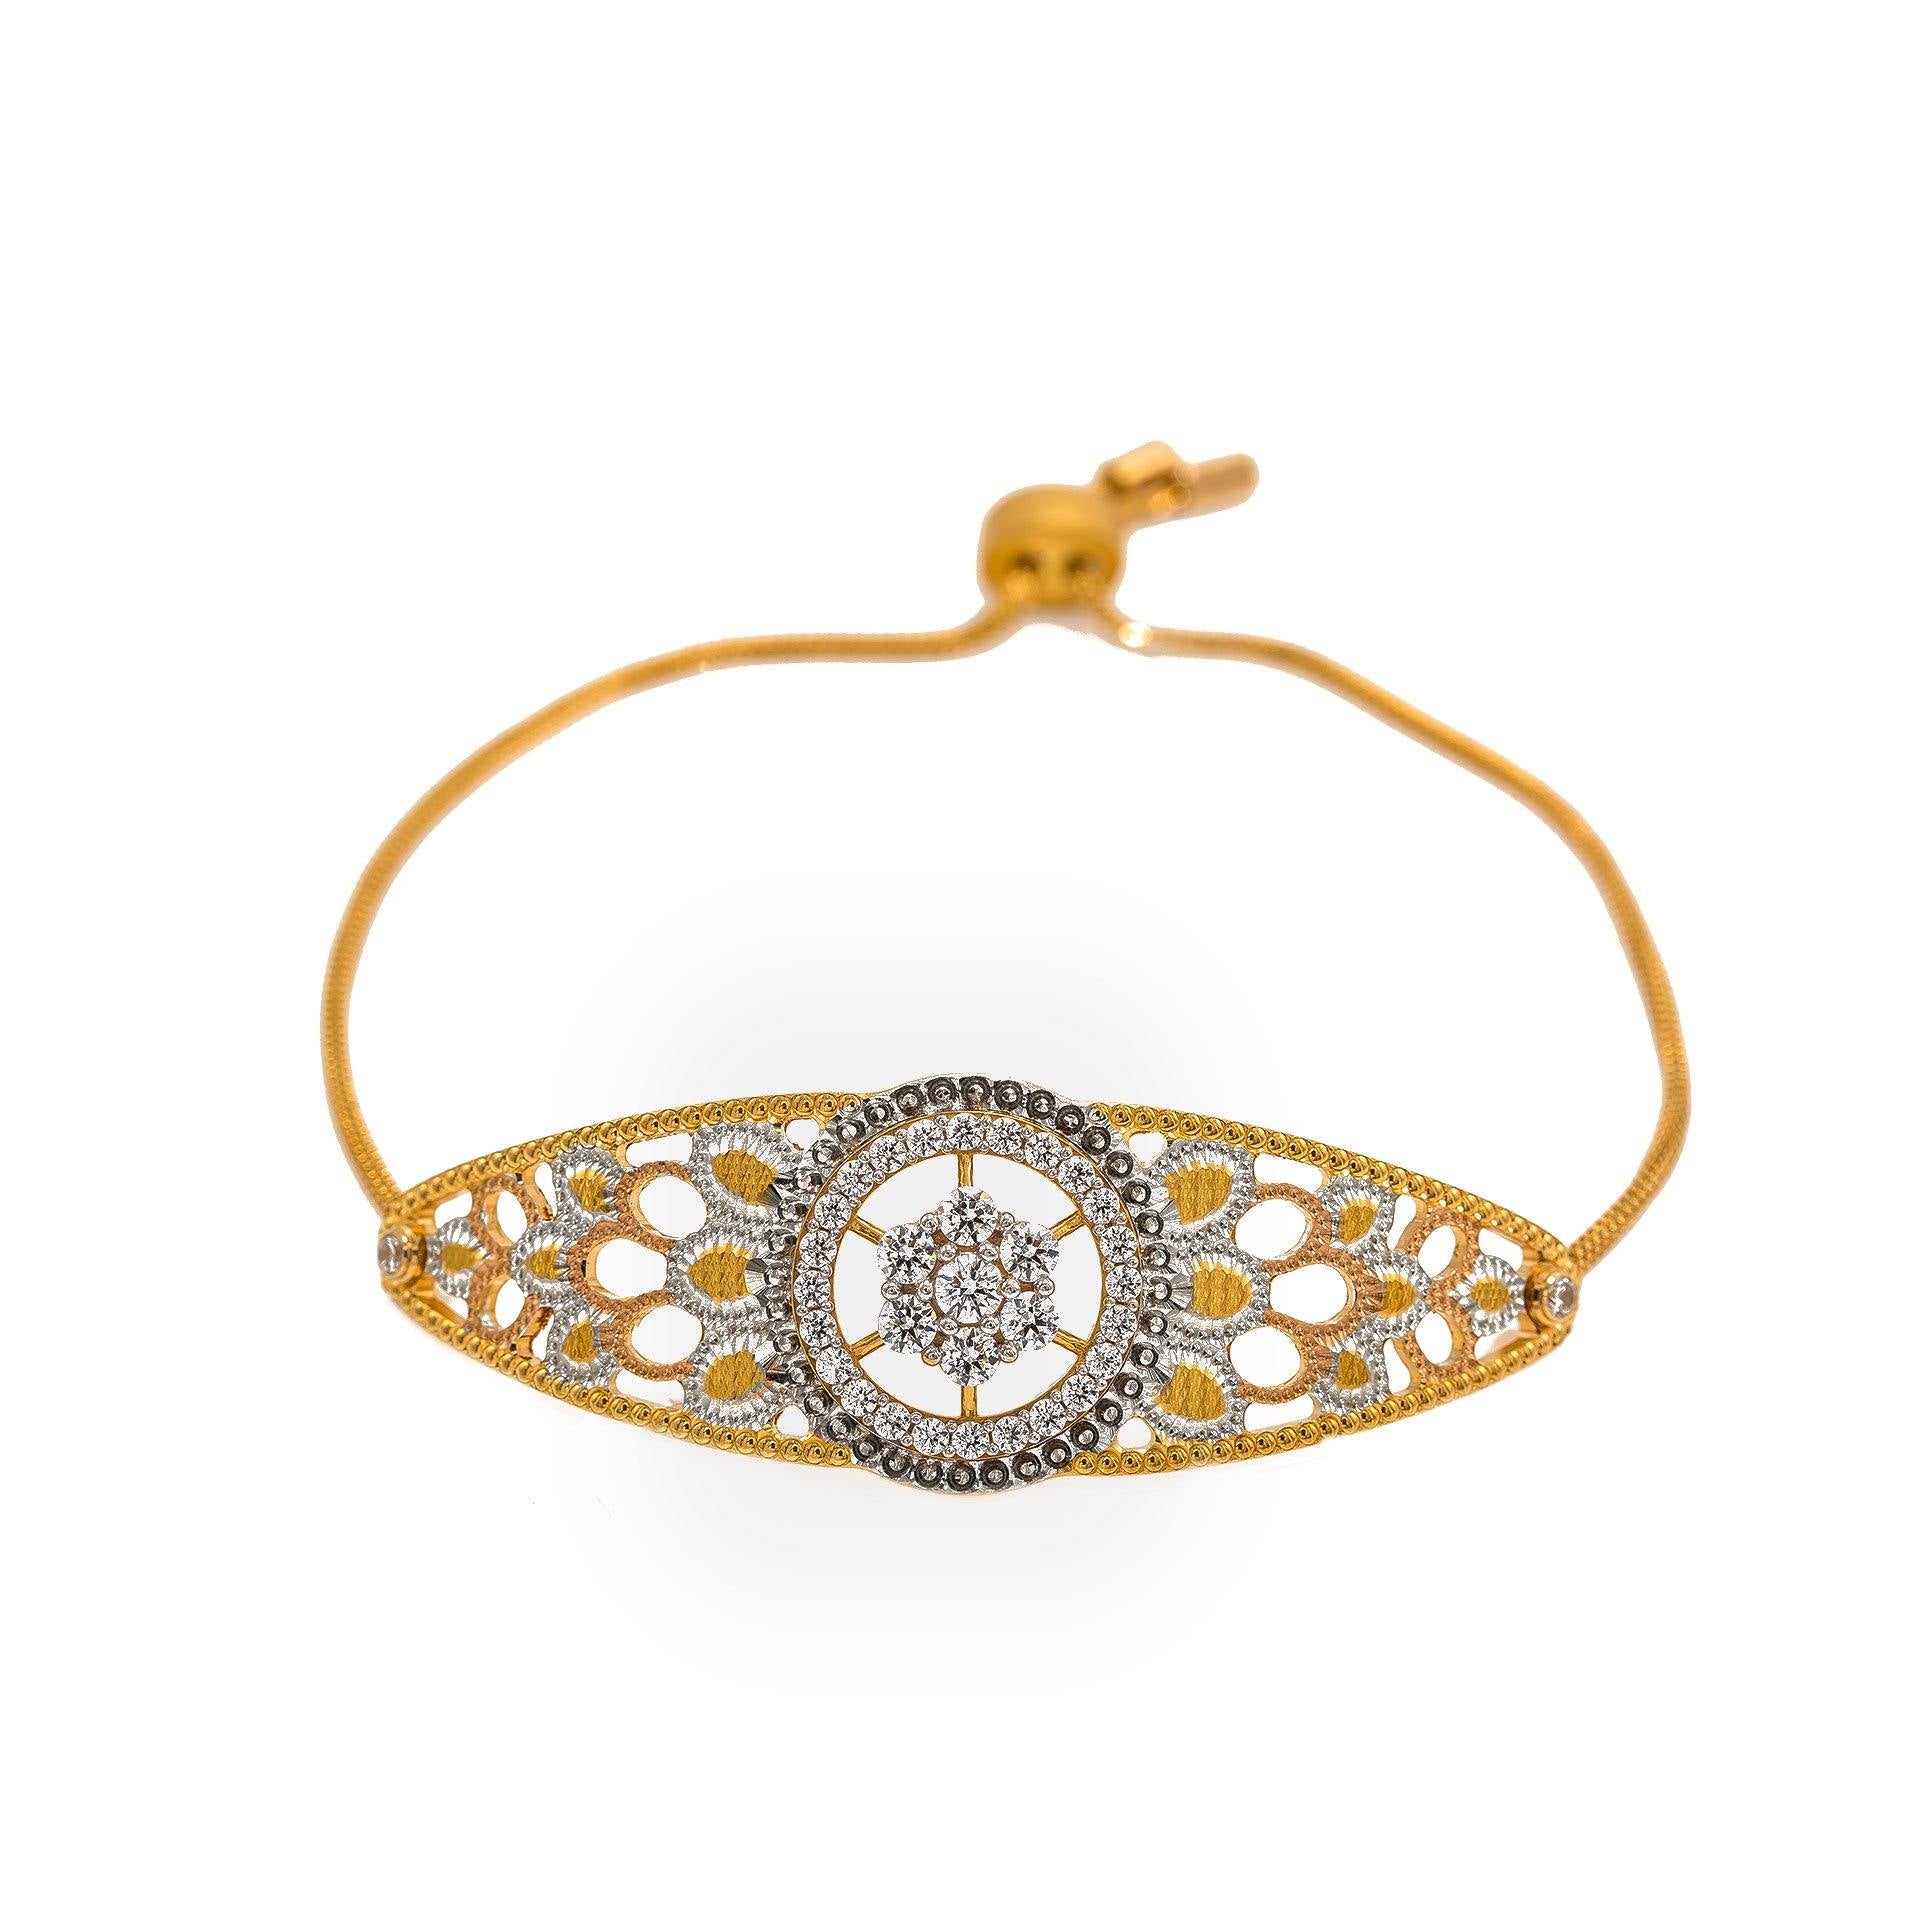 14k White Gold Wide Diamond Bracelet 3.52cttw , 8 inches - 8.8g - Ruby Lane